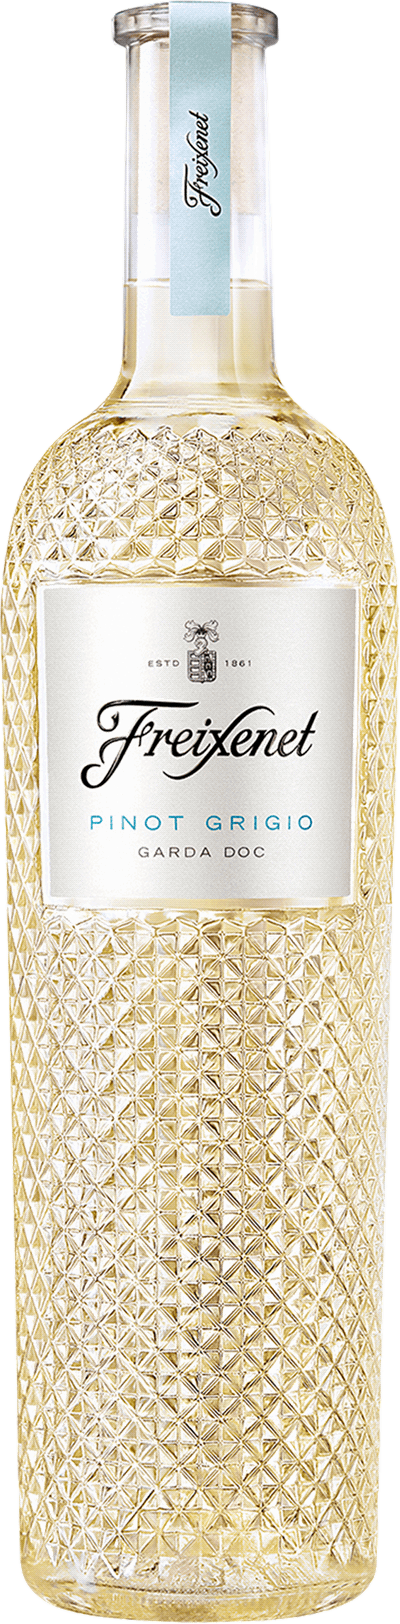 Freixenet Pinot Grigio Still wine